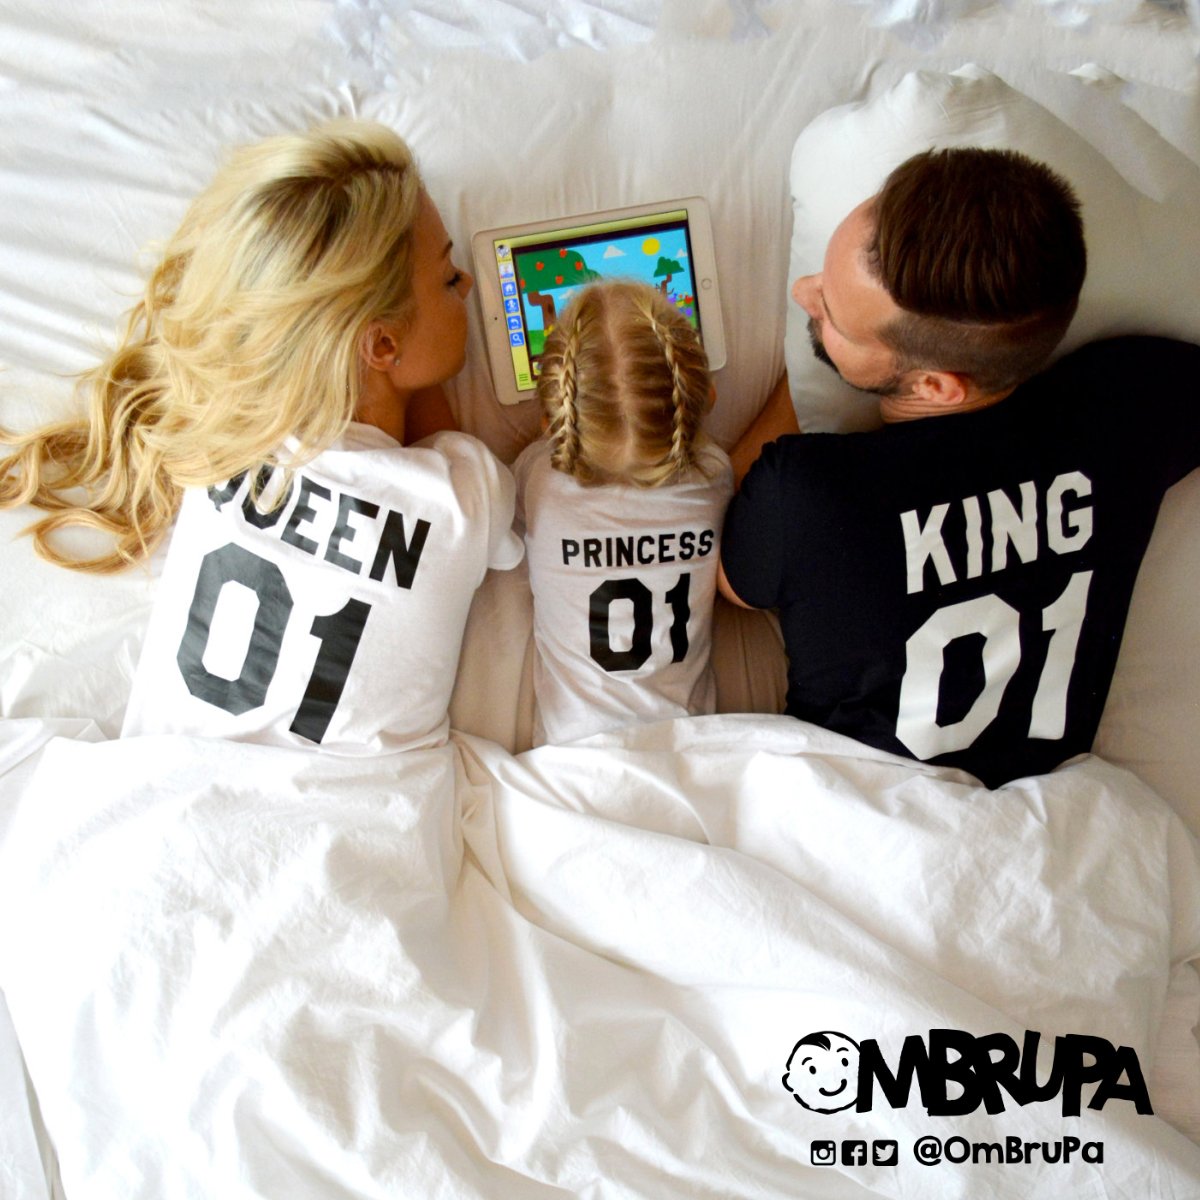 OmBruPa on "#Camisetas #Personalizadas #Familia #Queen #Princess #Amor https://t.co/1P3QZow4KS" /